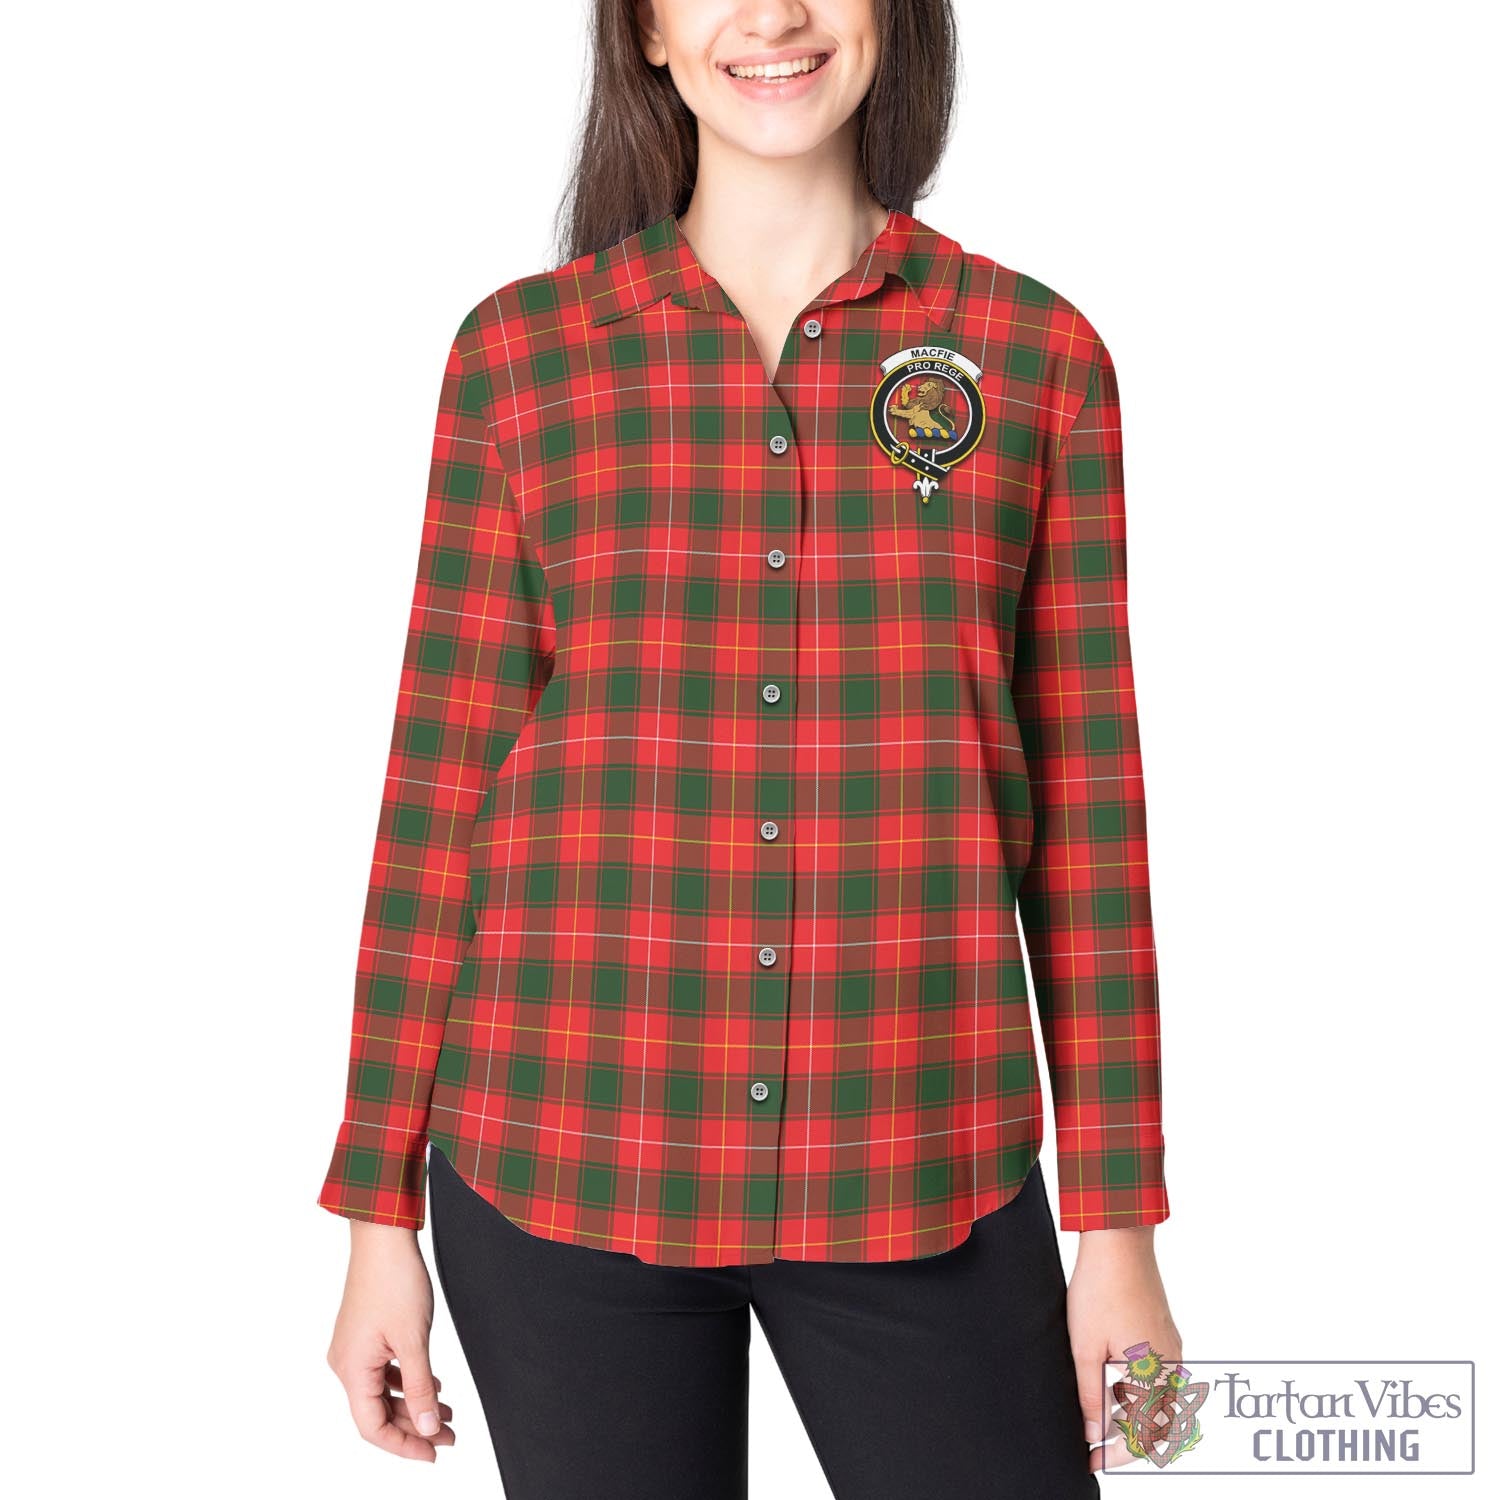 Tartan Vibes Clothing MacFie Modern Tartan Womens Casual Shirt with Family Crest